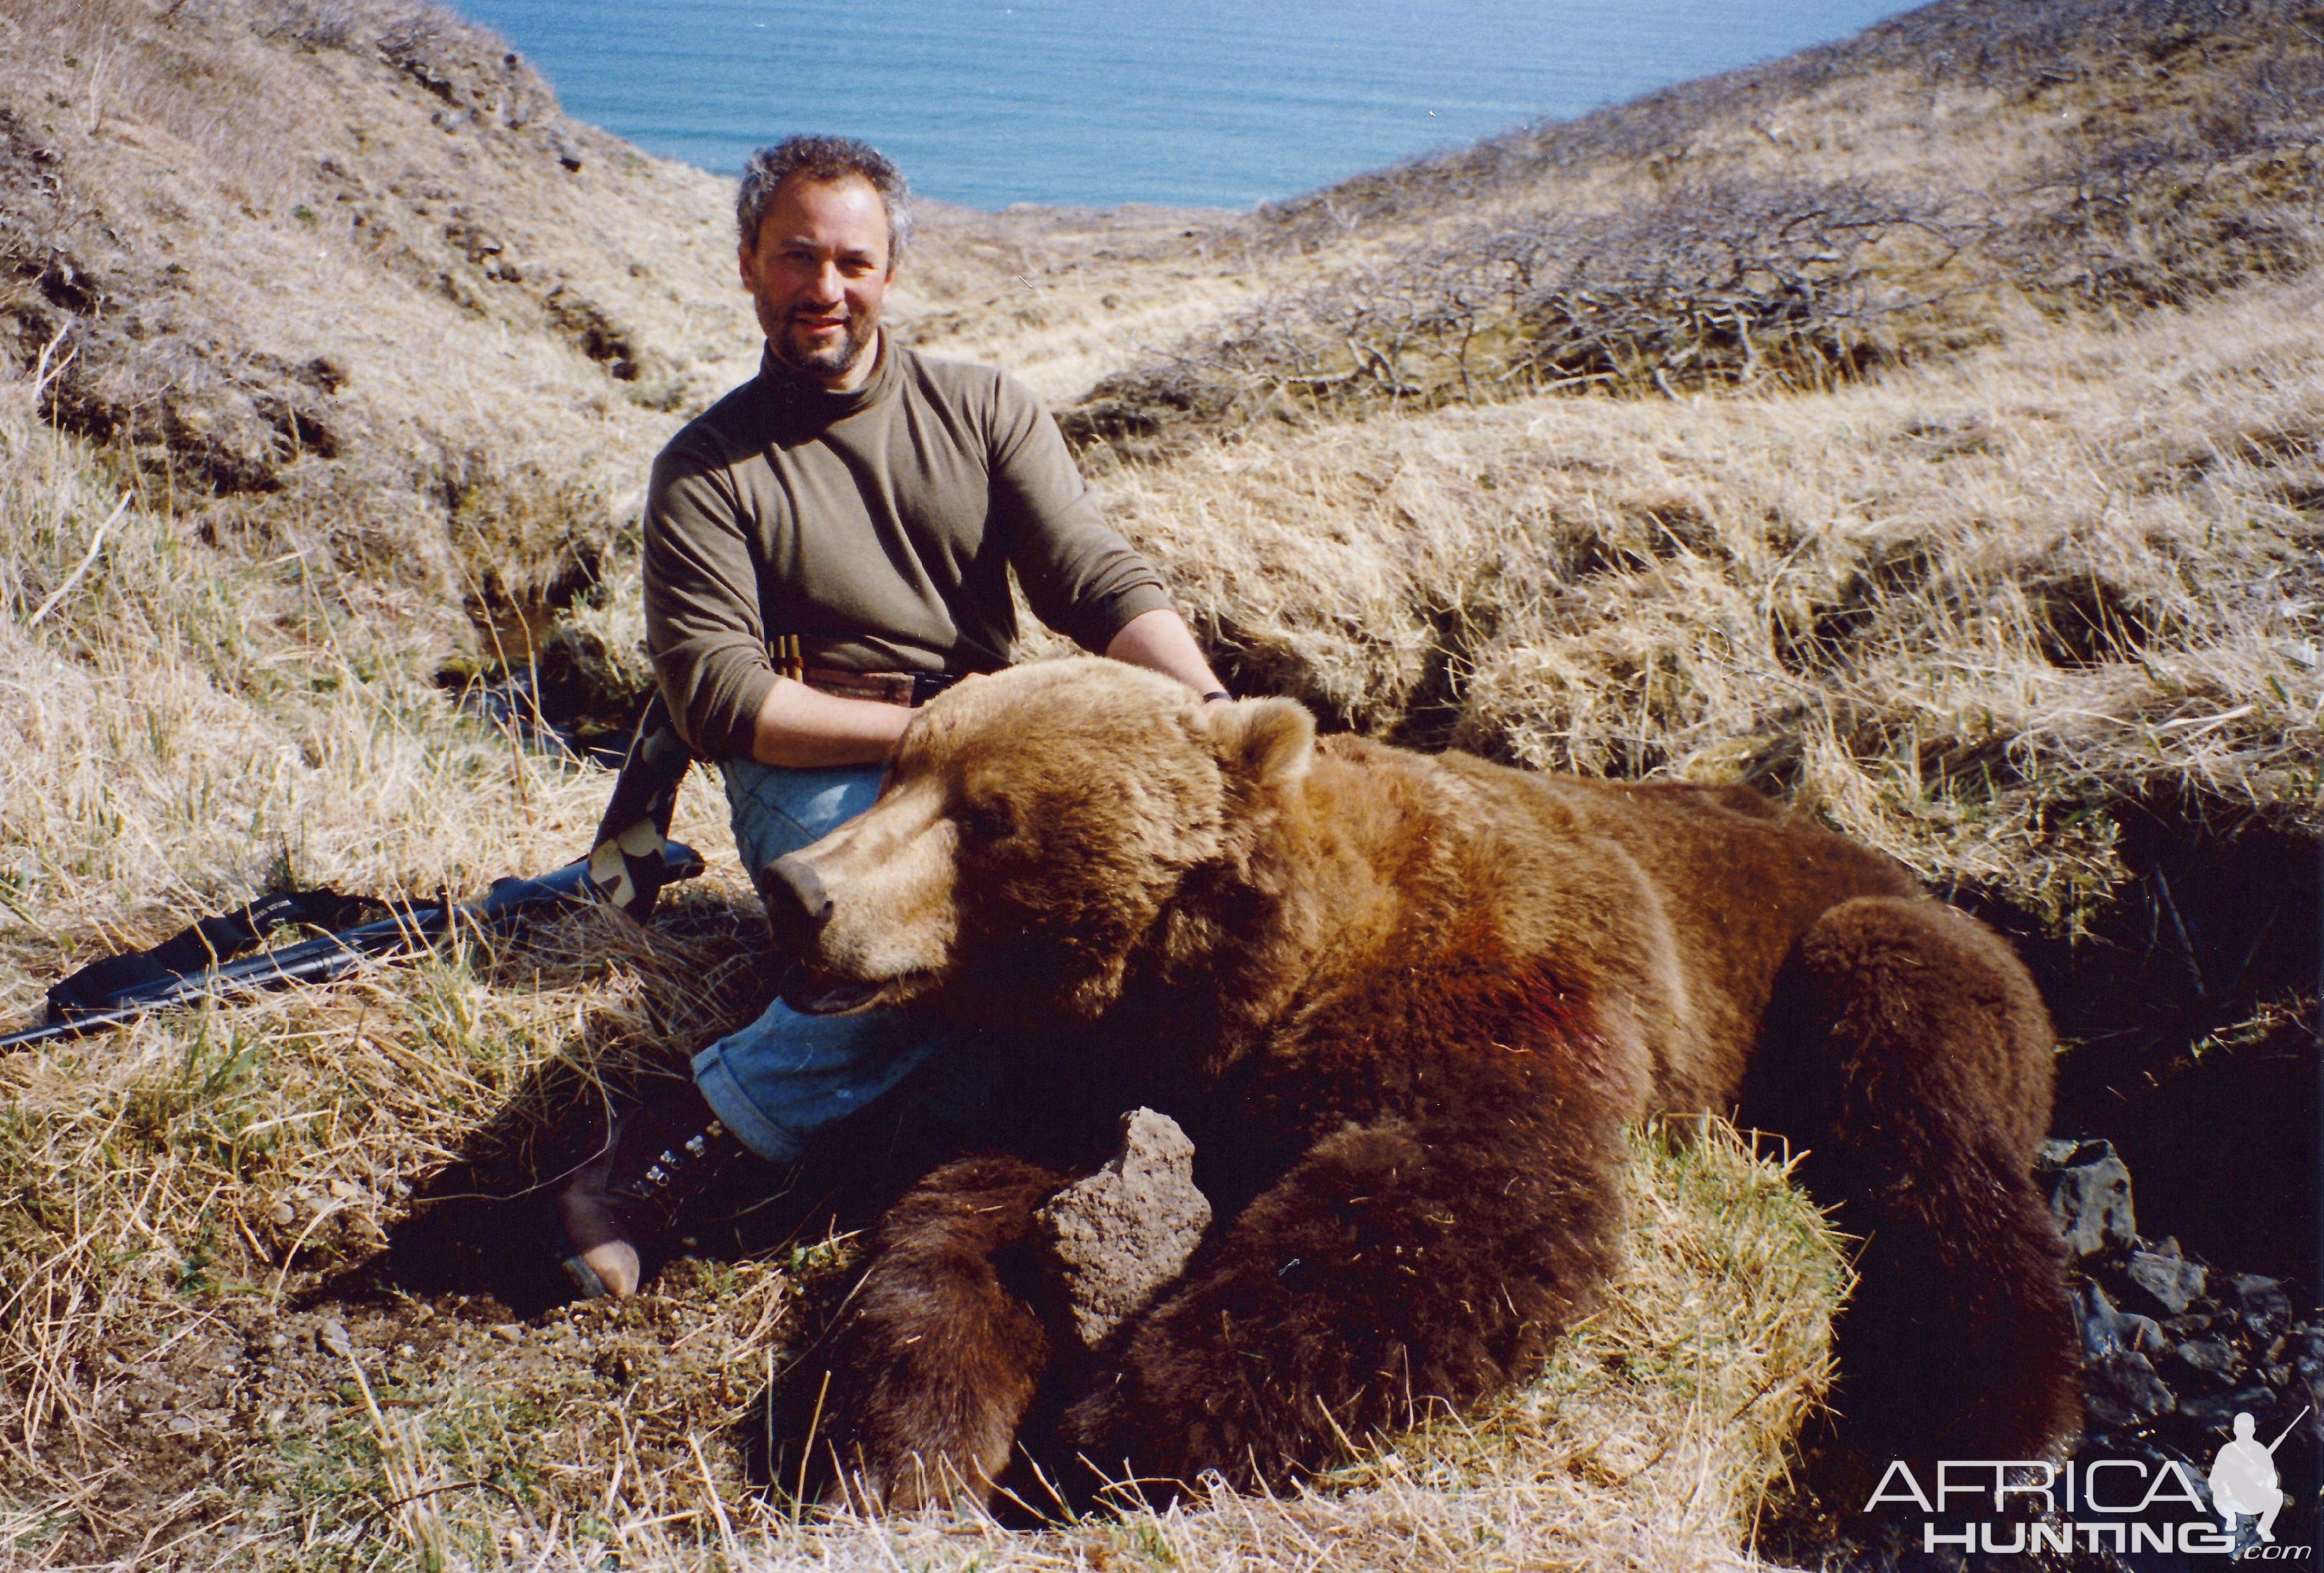 Coastal Alaskan Brown Bear